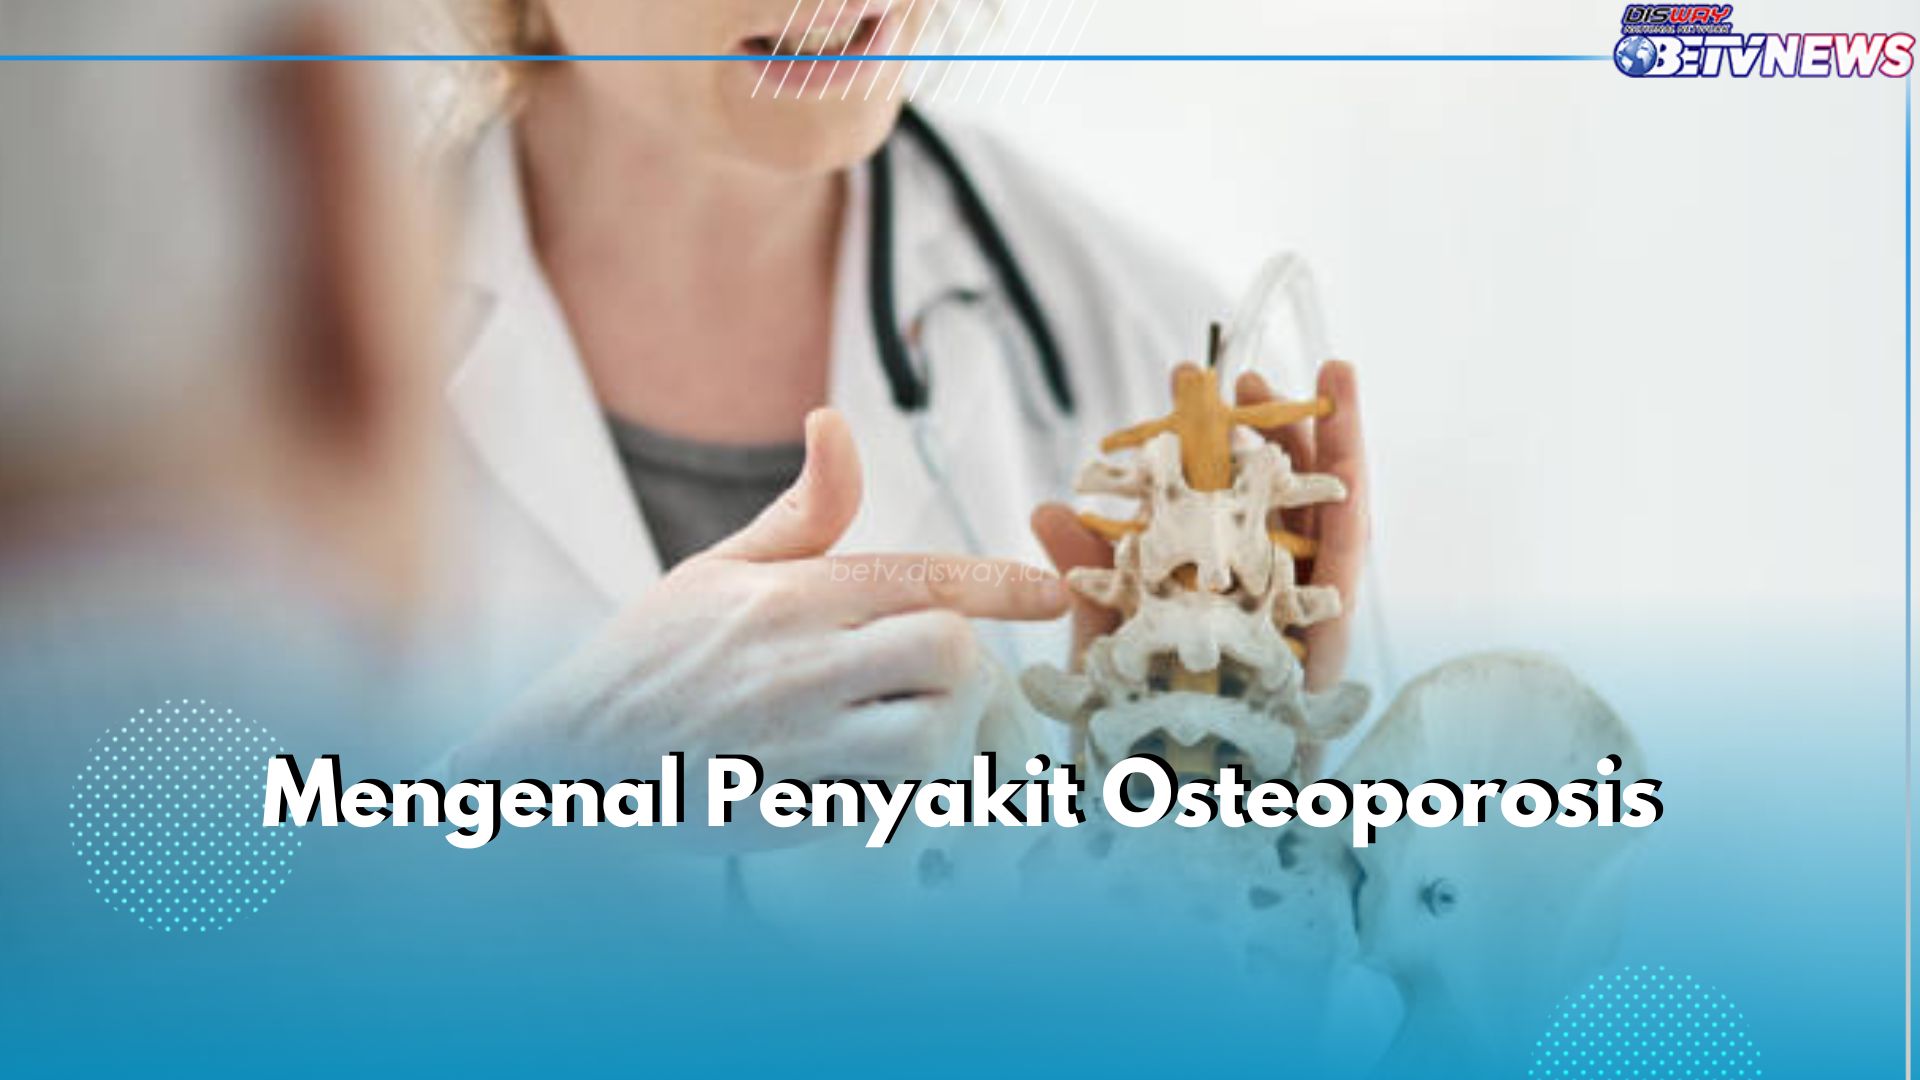 Mengenal Osteoporosis, Pengeroposan Tulang yang Sering Lambat Disadari, Apa Itu?